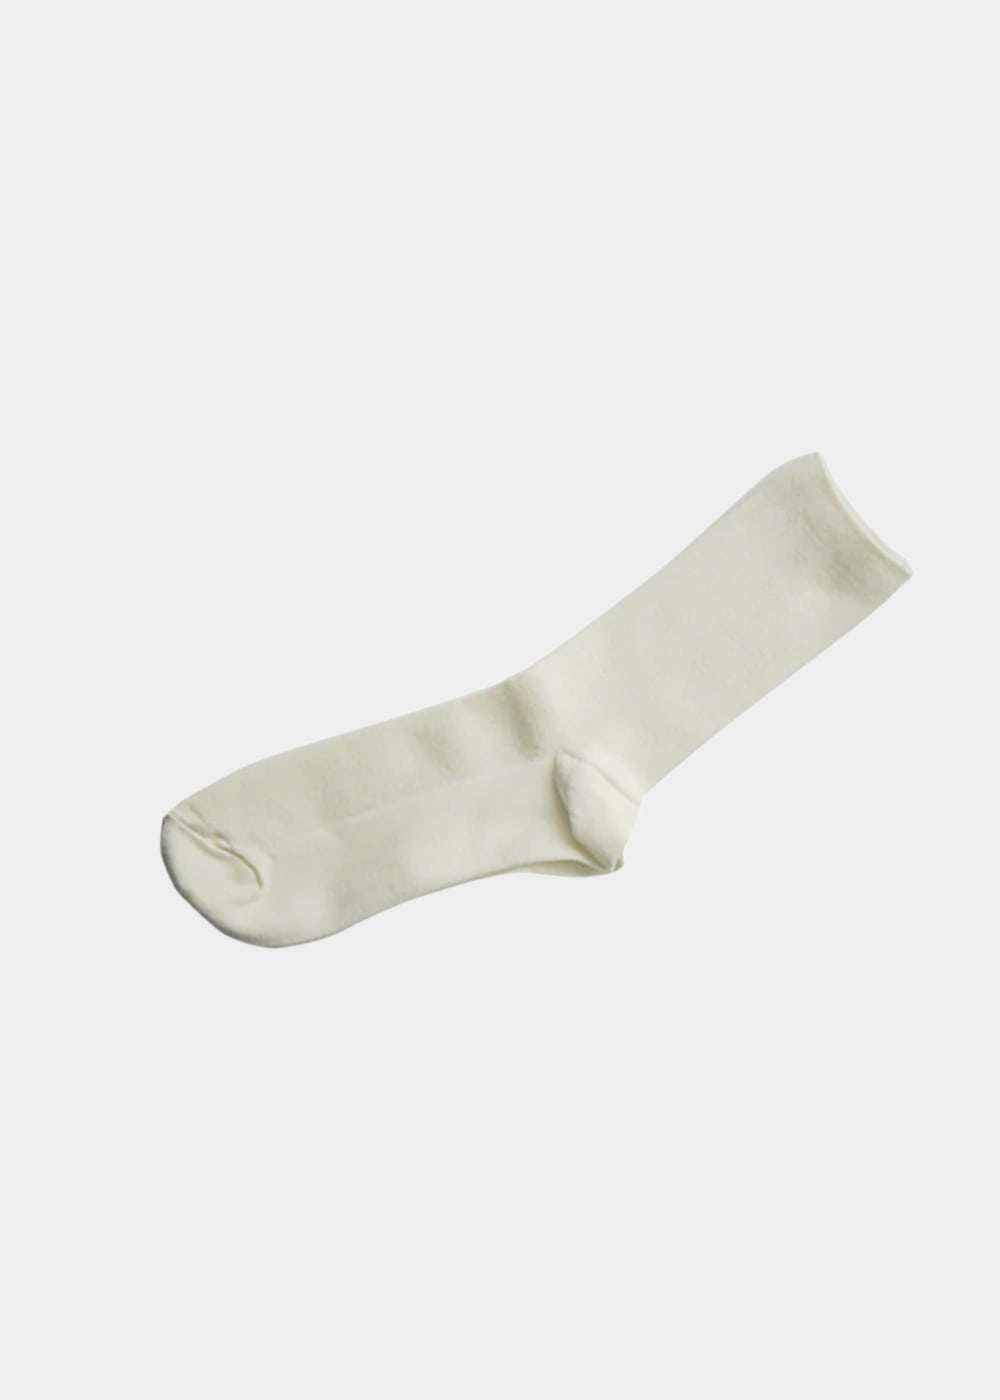 American Sea Island Cotton Socks - 4 colors